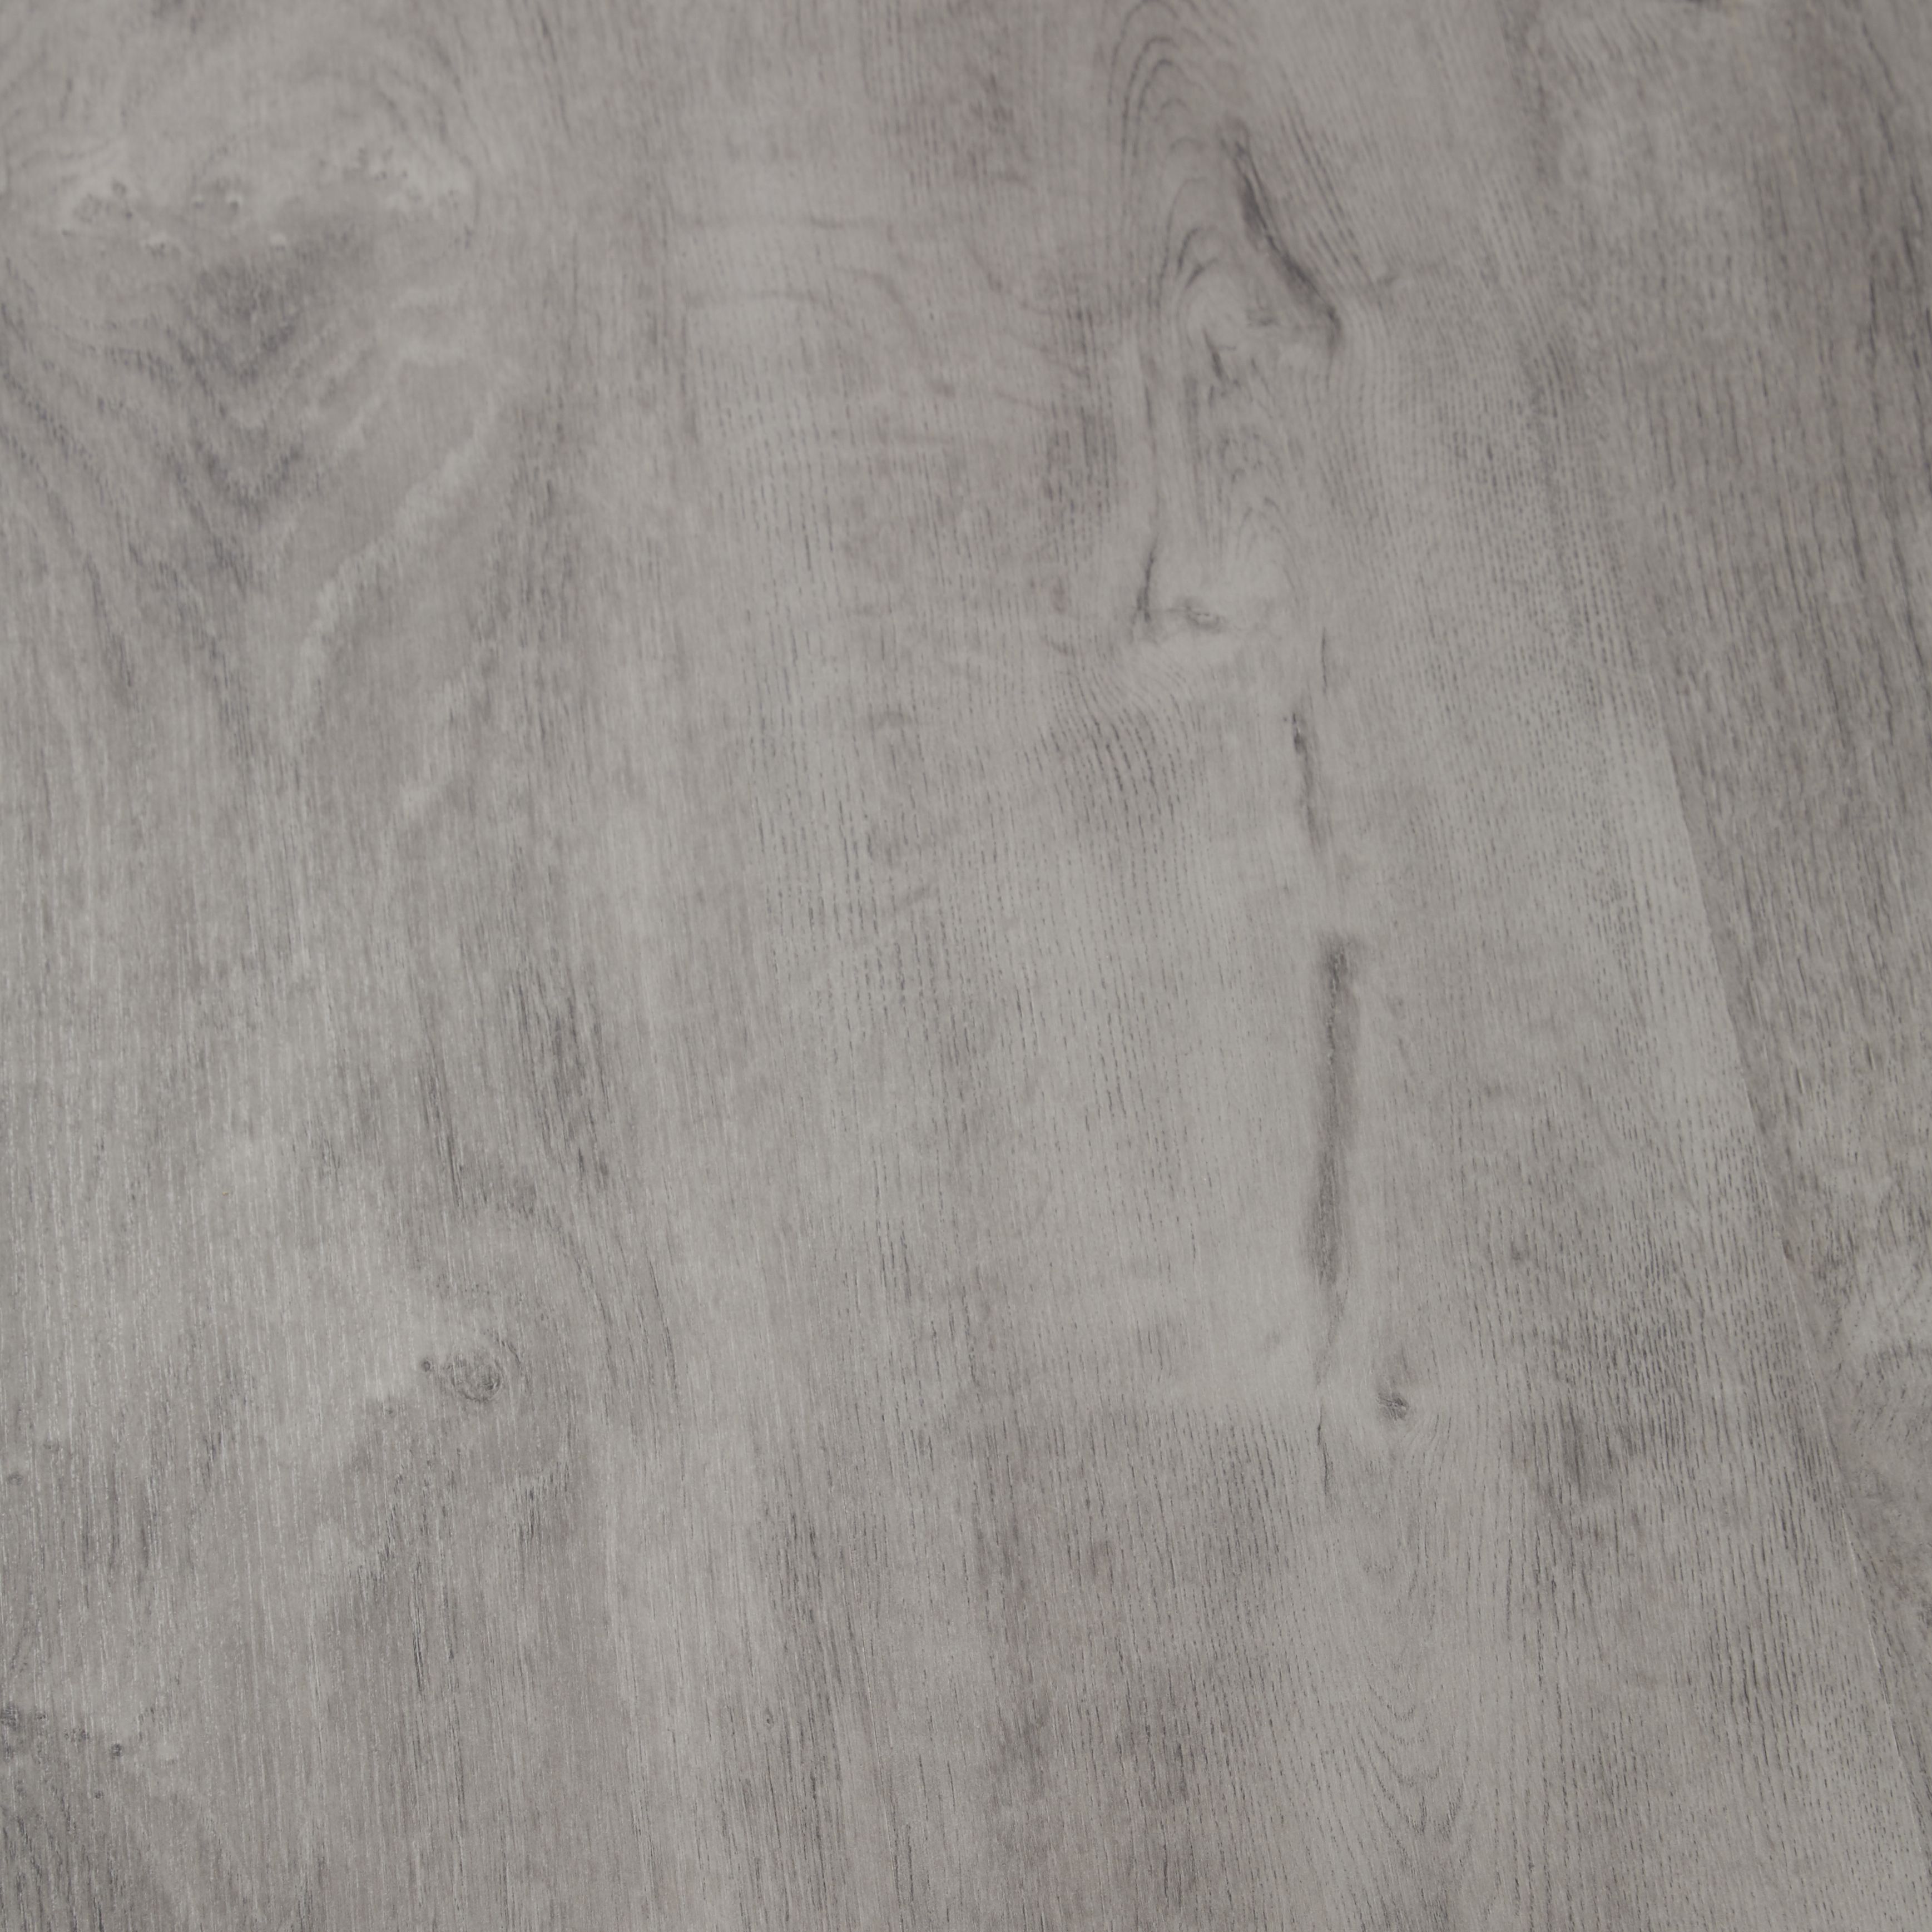 GoodHome Caloundra Vintage Oak Grey wood effect Laminate Flooring Sample